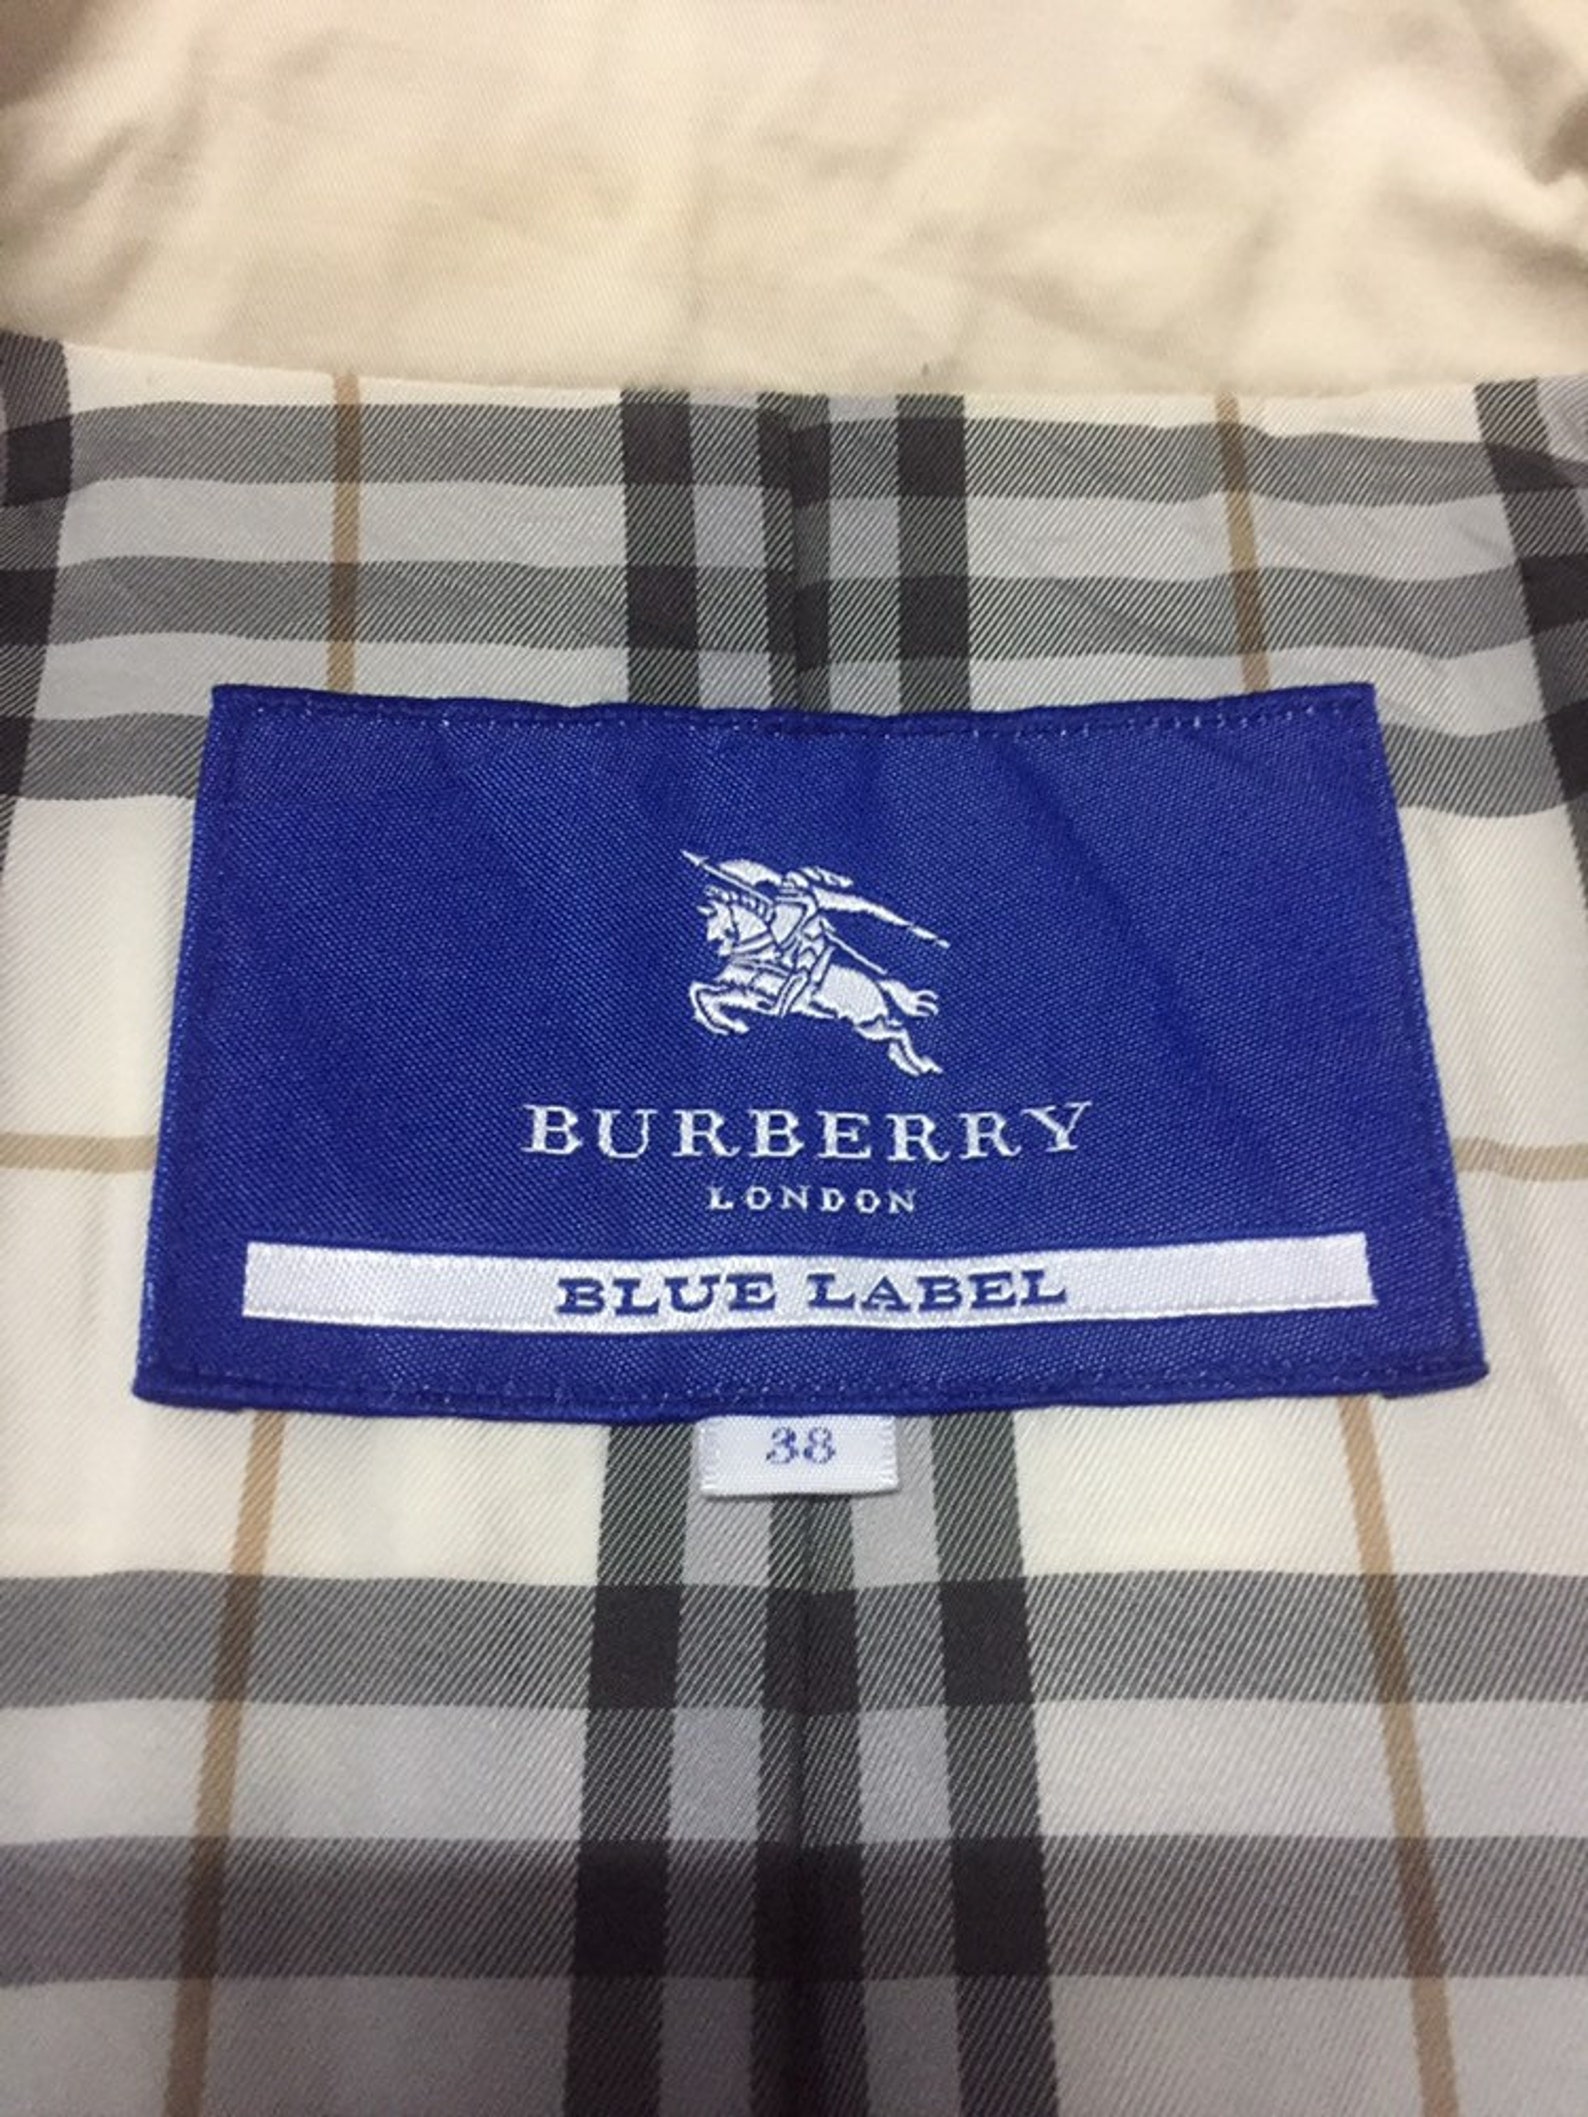 Authentic Burberry London Blue Label Trench Coat Long Jacket - Etsy UK